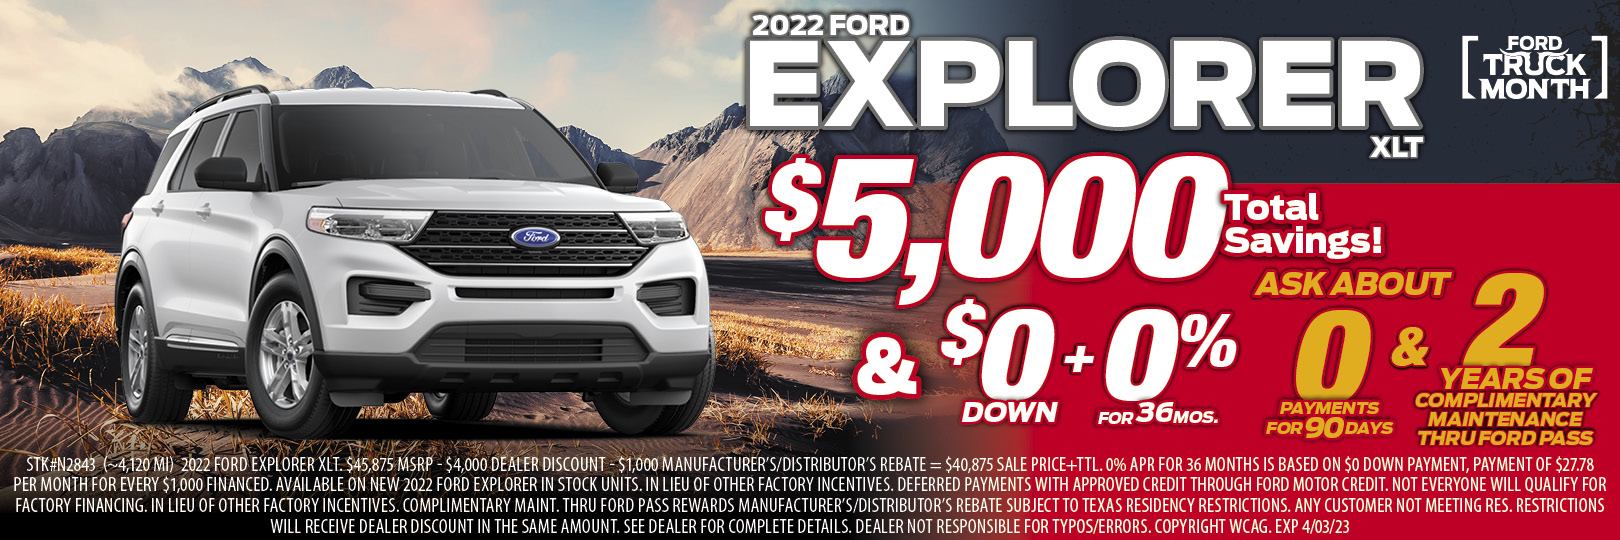 Planet Ford Explorer Special Offer